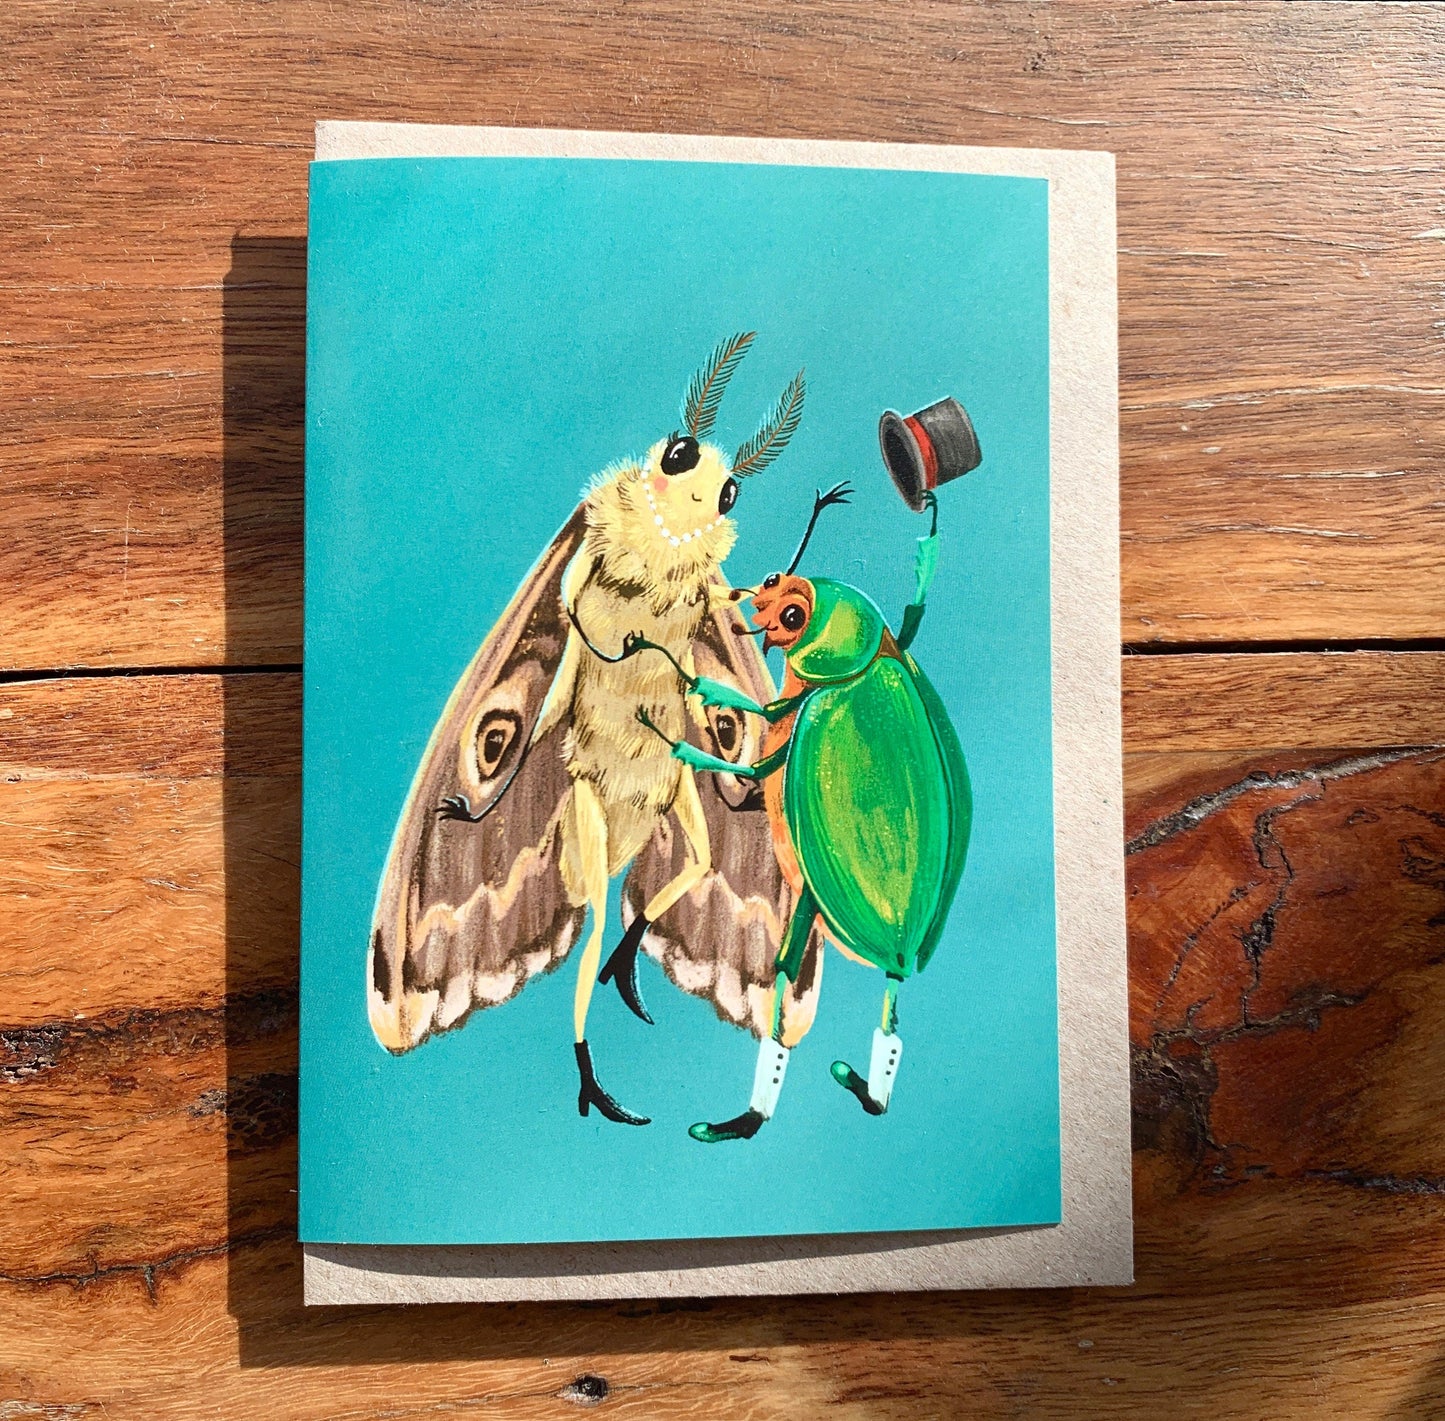 Anna Seed Art | Greeting Card - Fancy Dancing. Cute illustration